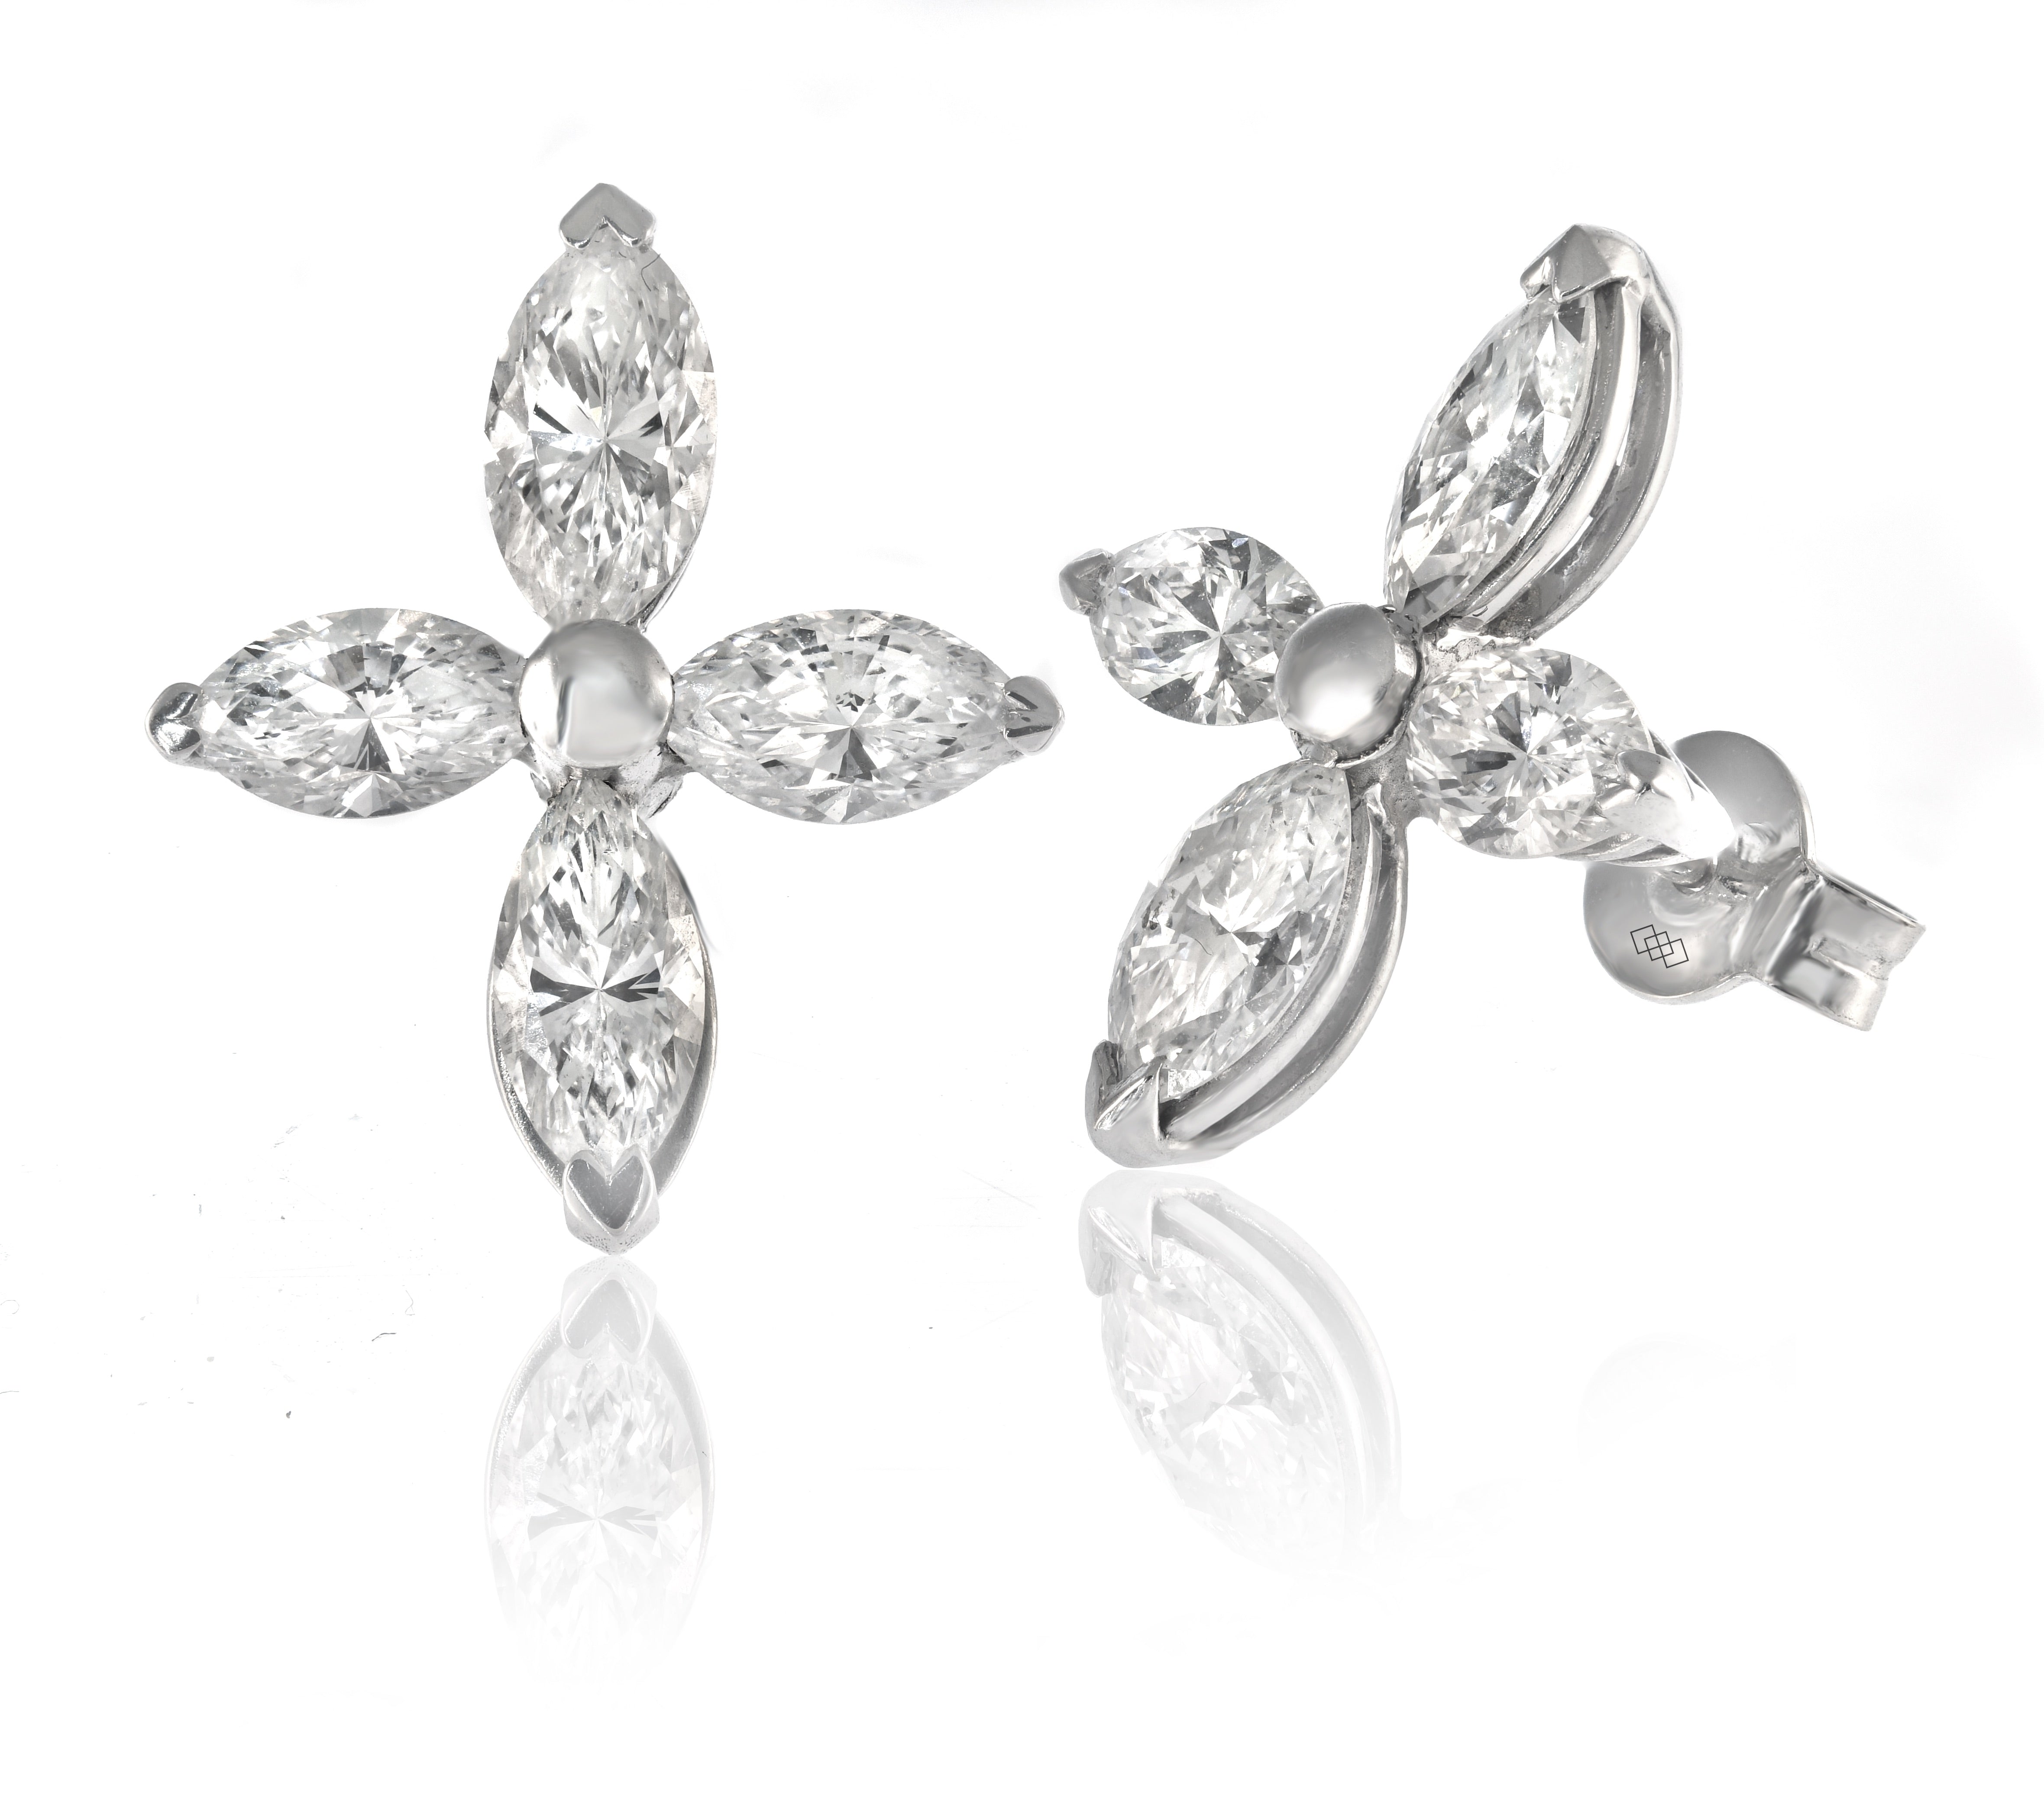 Earrings - Marquise Cut Diamond Stud Earrings